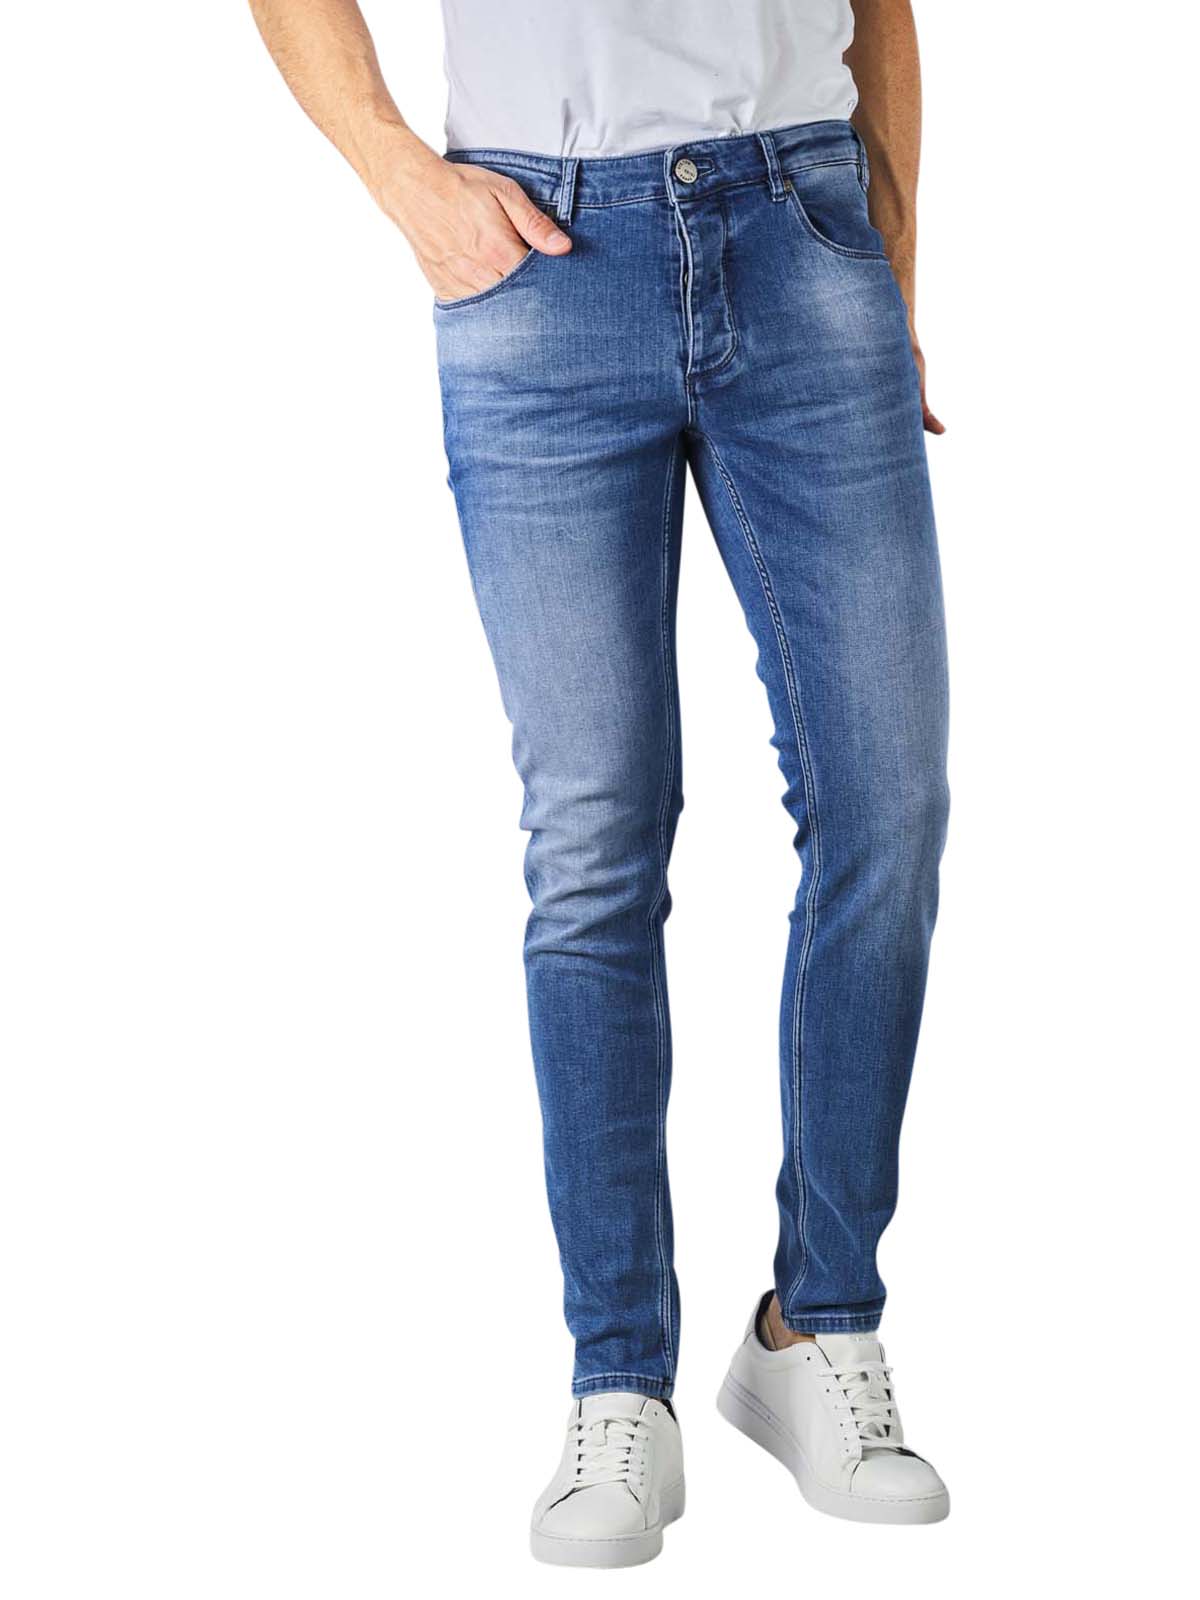 definitief Kloppen mengsel Gabba Rey Jeans Slim Fit K3866 Jeans RS1365 Gabba Men's Jeans | Free  Shipping on BEBASIC.CH - SIMPLY LOOK GOOD